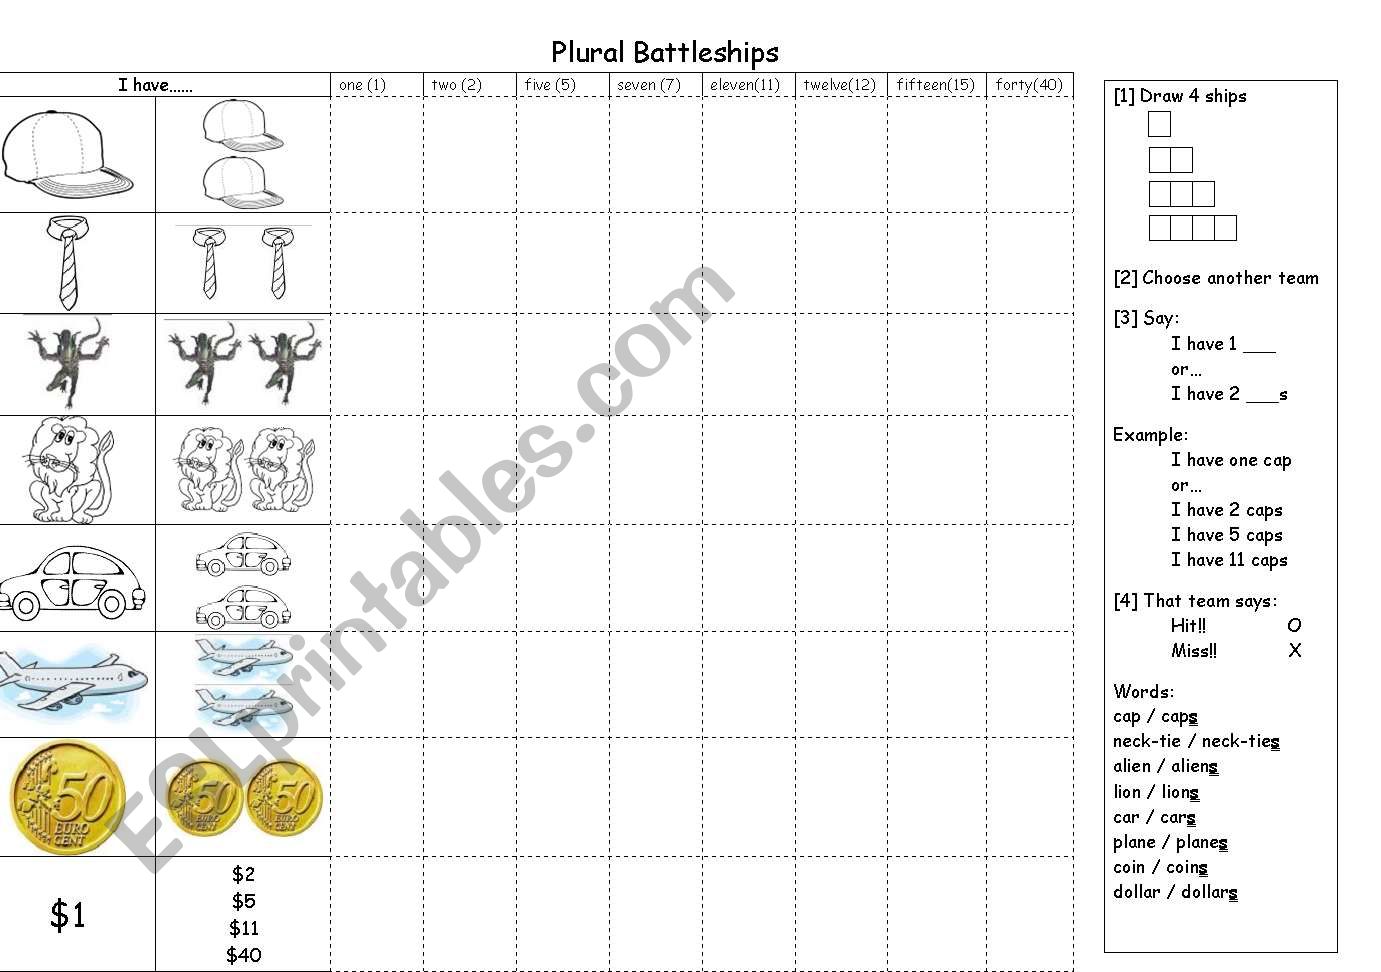 Plural/Single battleships worksheet